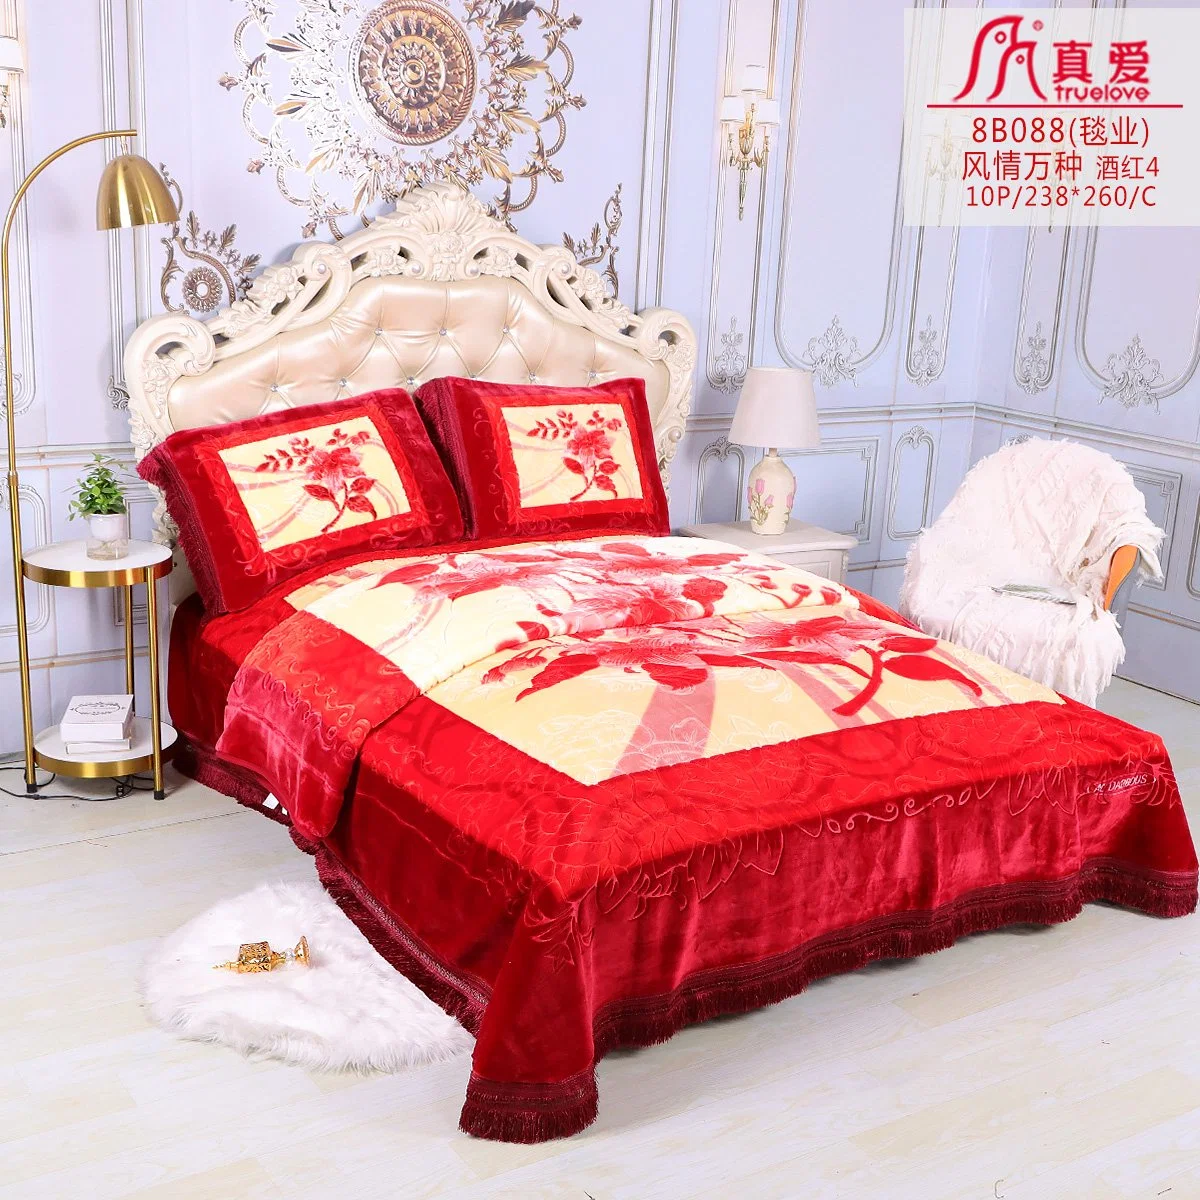 China Bedding Set Manufacturer Minky Cloudy Raschel Super Soft Fur Bedding Set Blanket Sheet Bedsheet Polyester Bedding Set Cheap Price 1ply 2ply 220*240cm